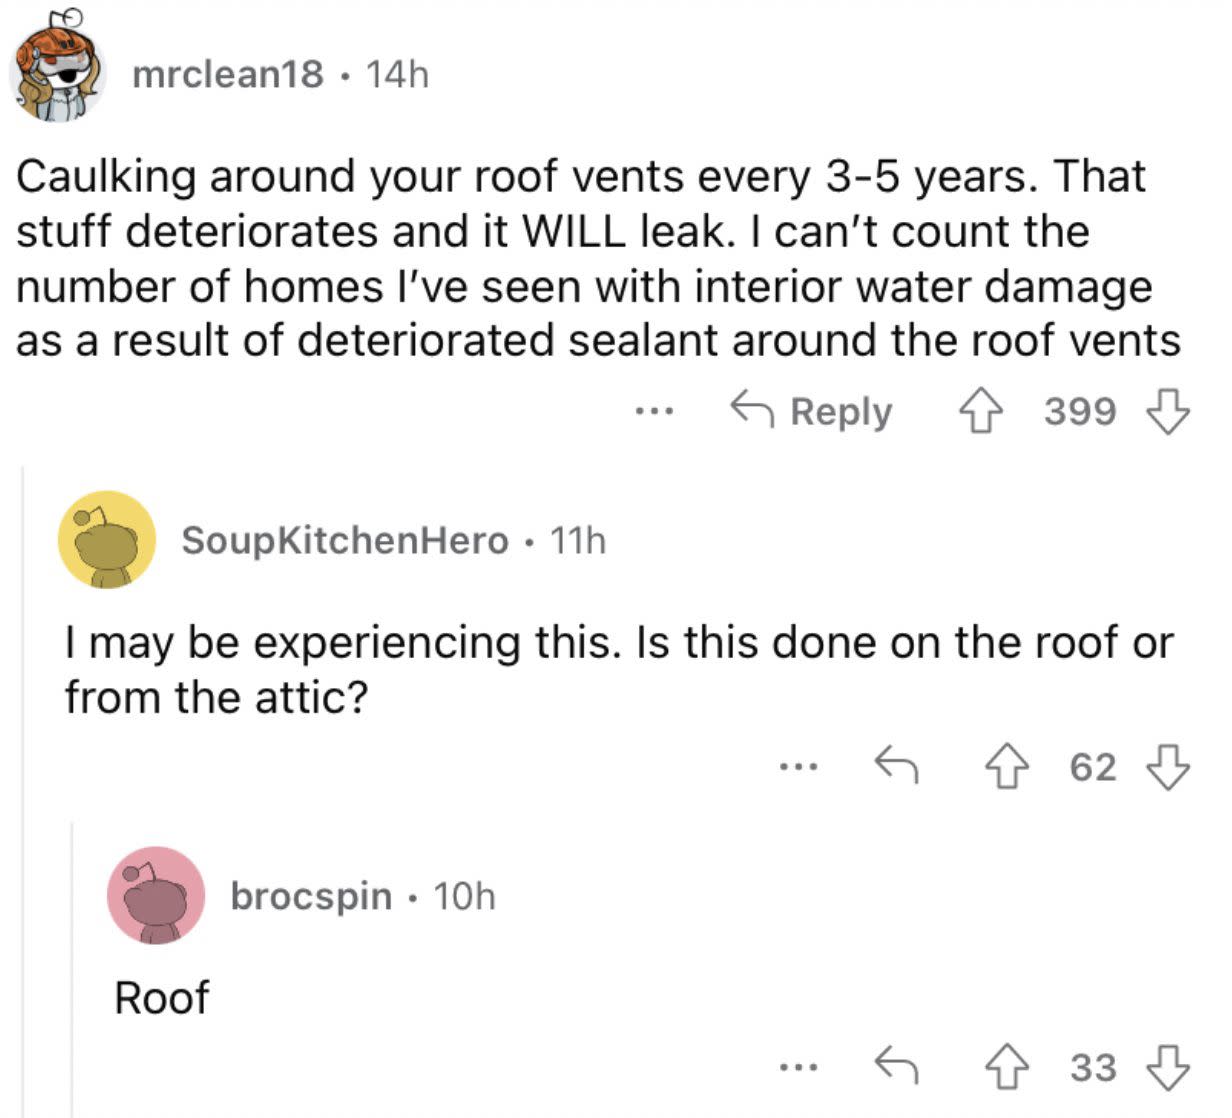 Reddit screenshot about caulking around your home to avoid interior water damage.